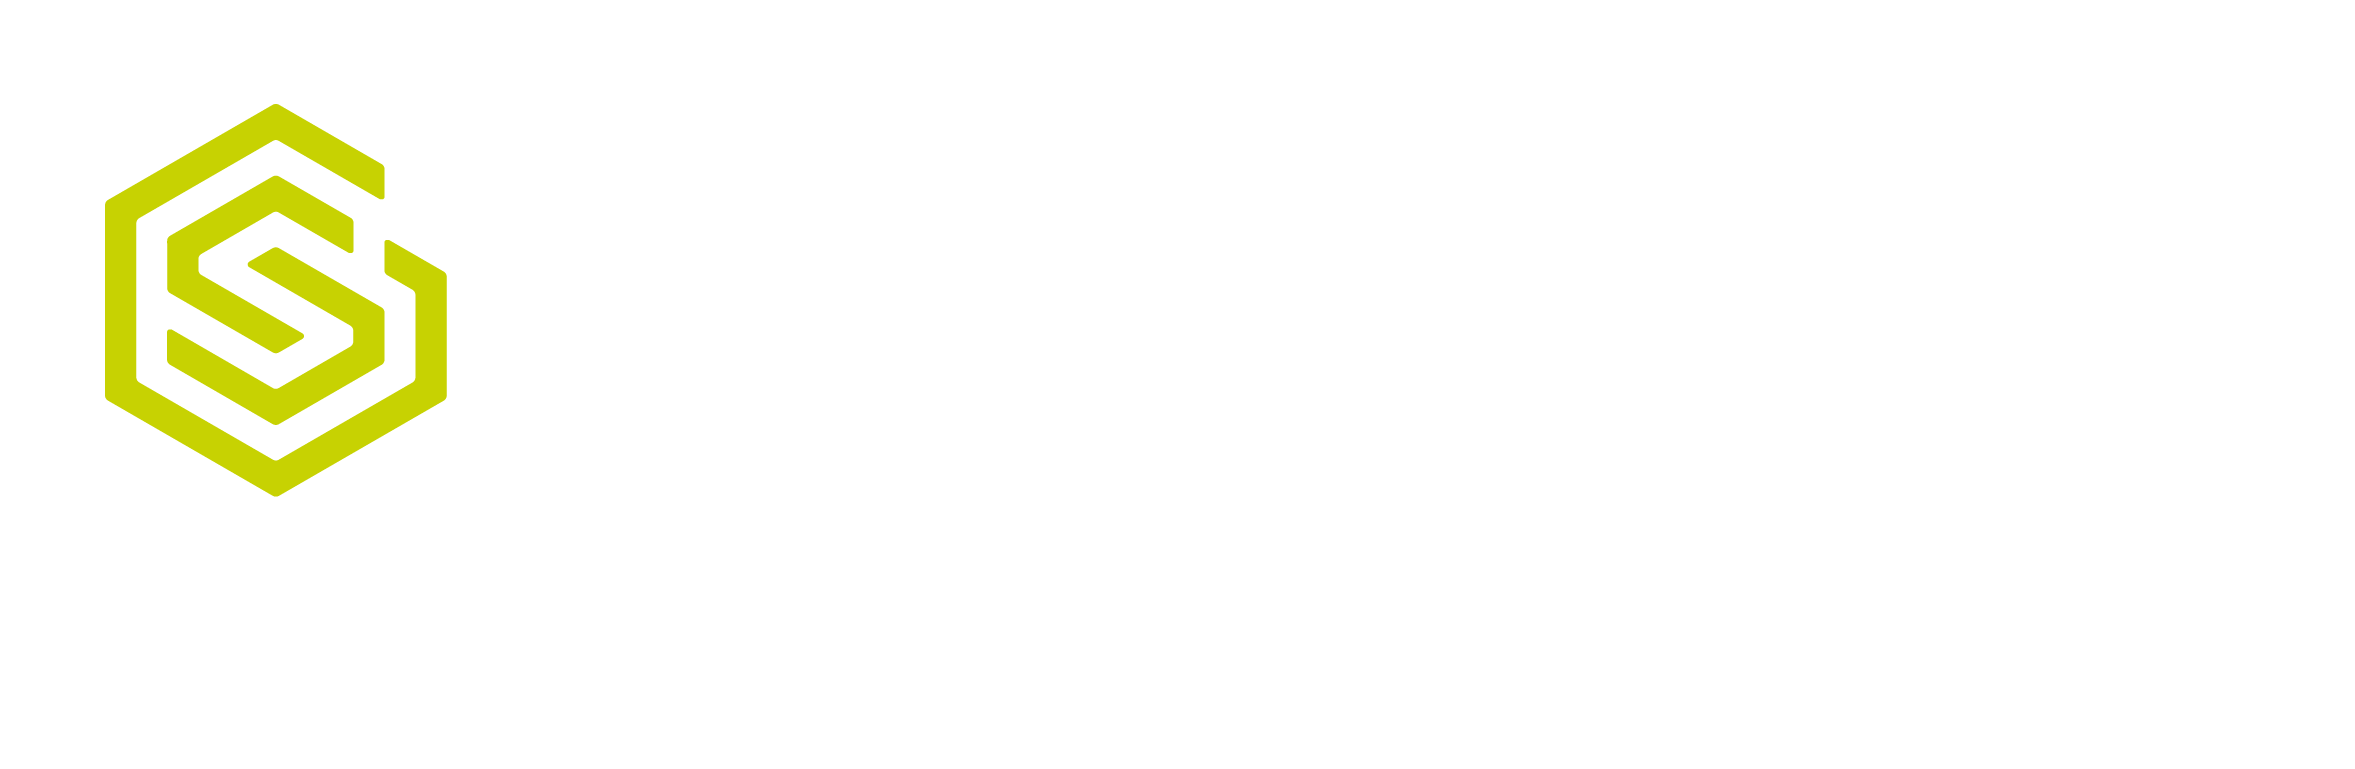 SSG Insight Logo